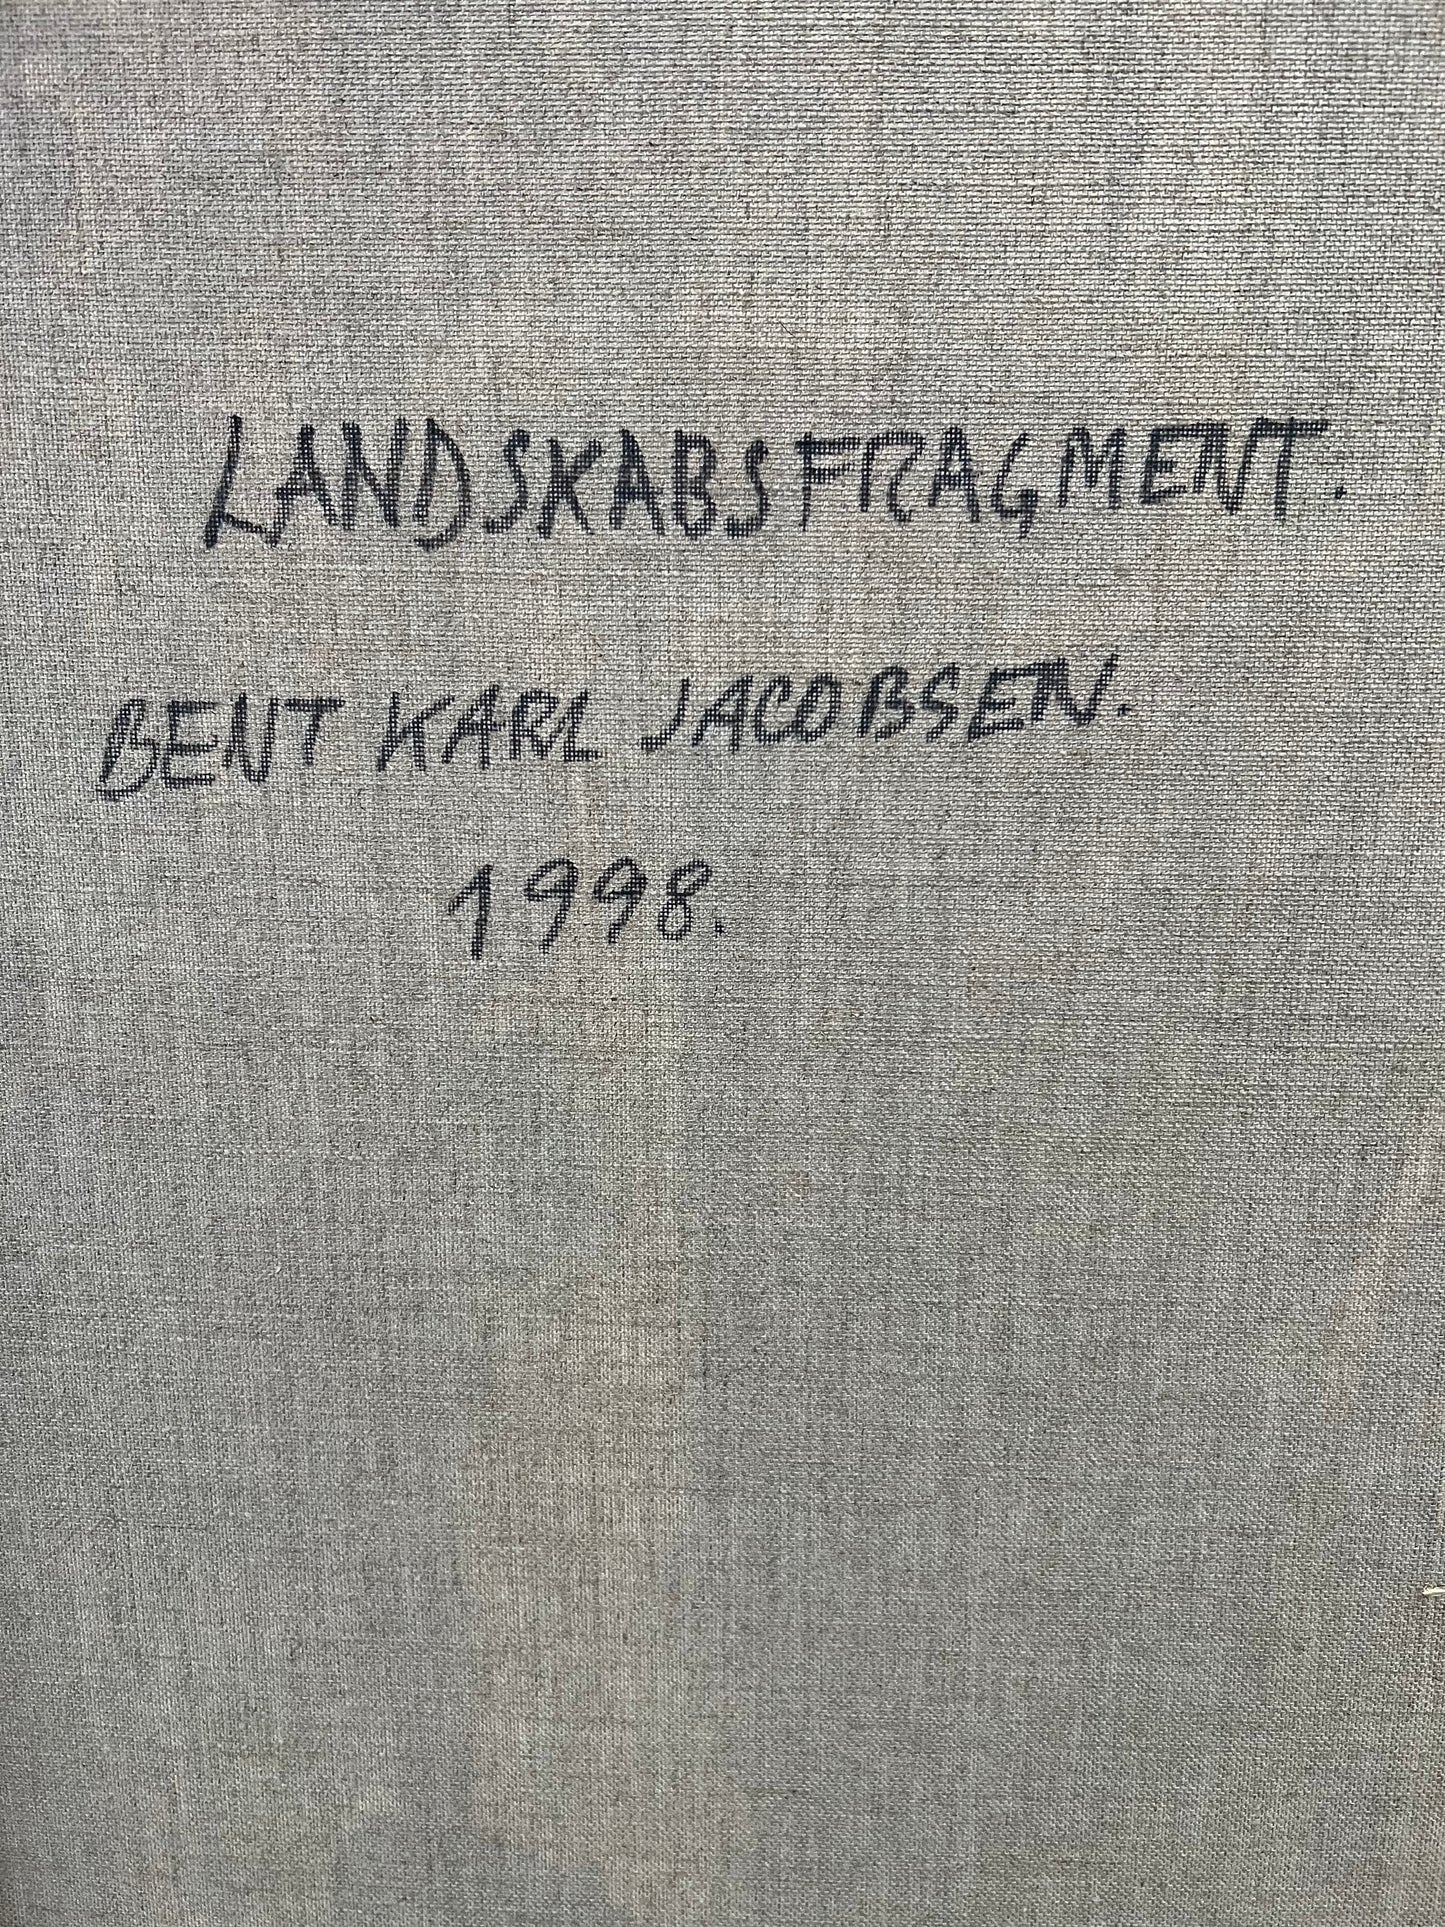 Bent Karl Jacobsen. “Landskabsfragment”, 1998